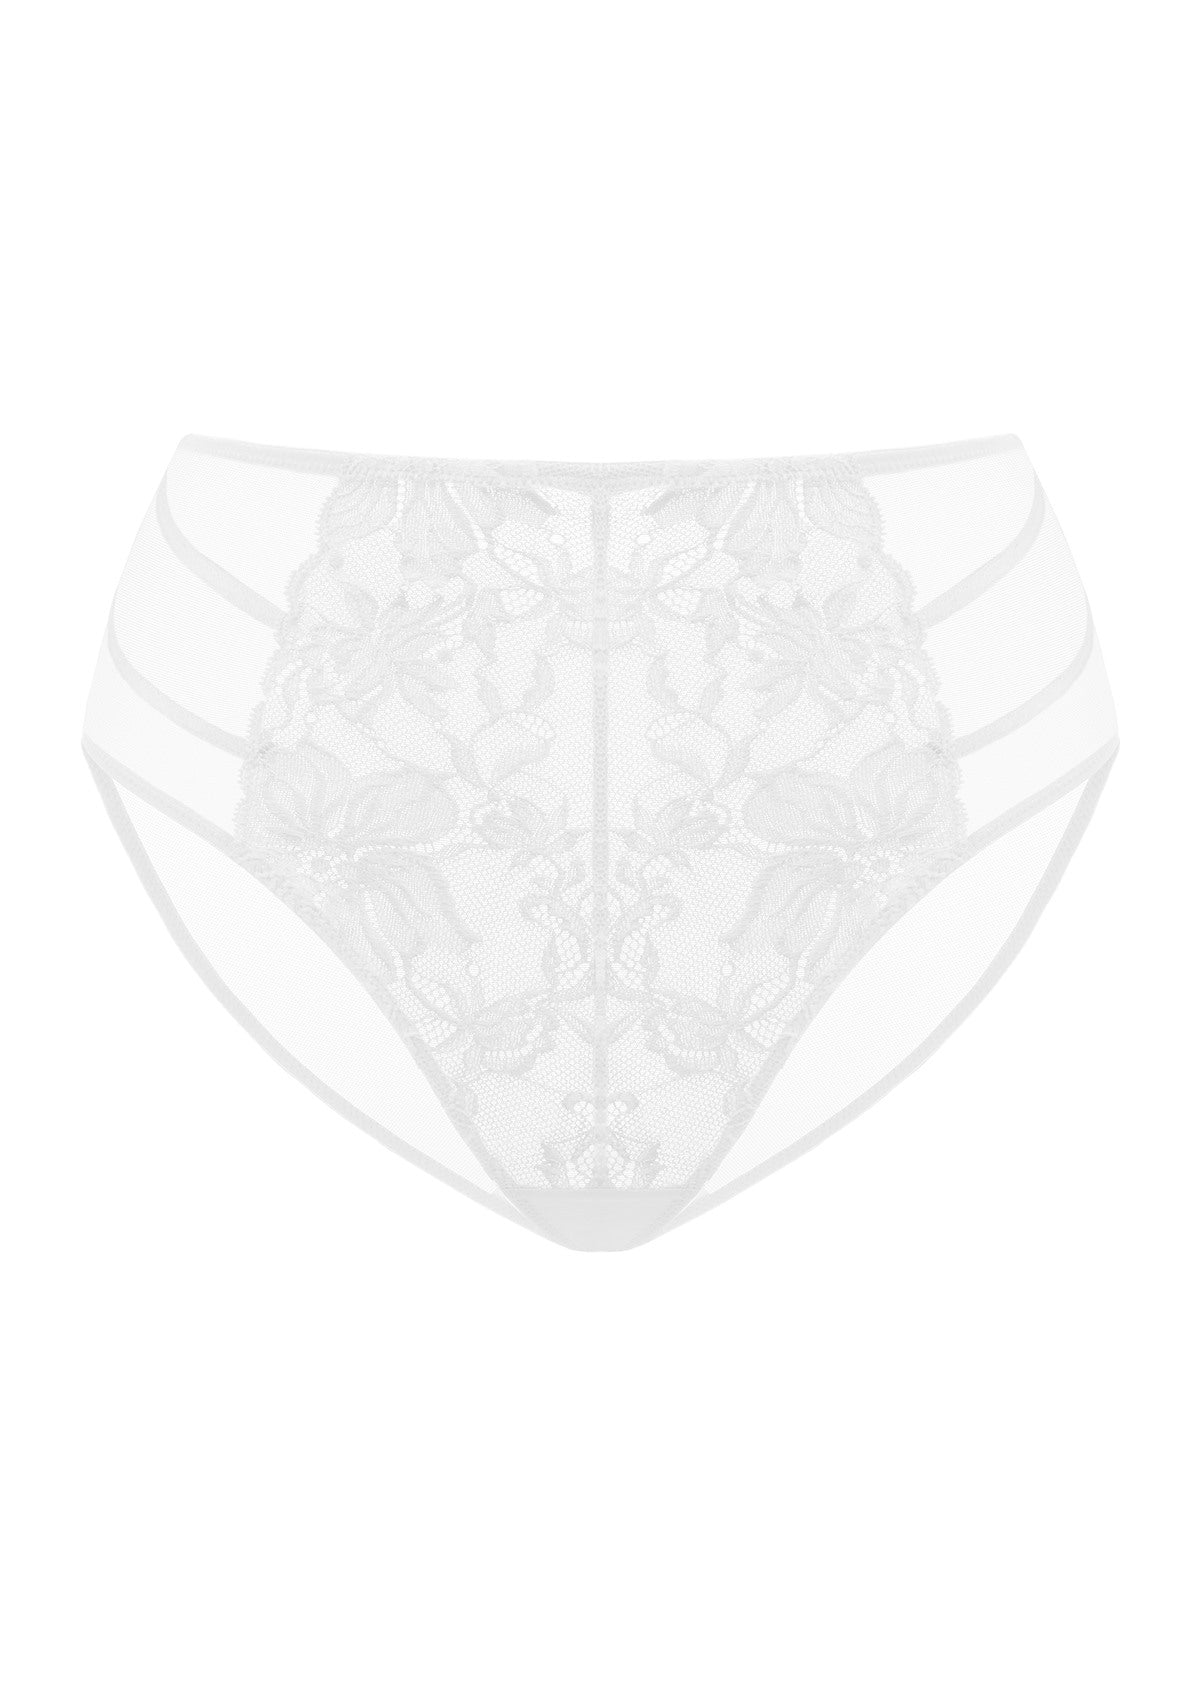 HSIA Mid-Rise Elegant Feminine Sheer Lace Mesh Comfortable Underwear. - XXXL / High-Rise Brief / White